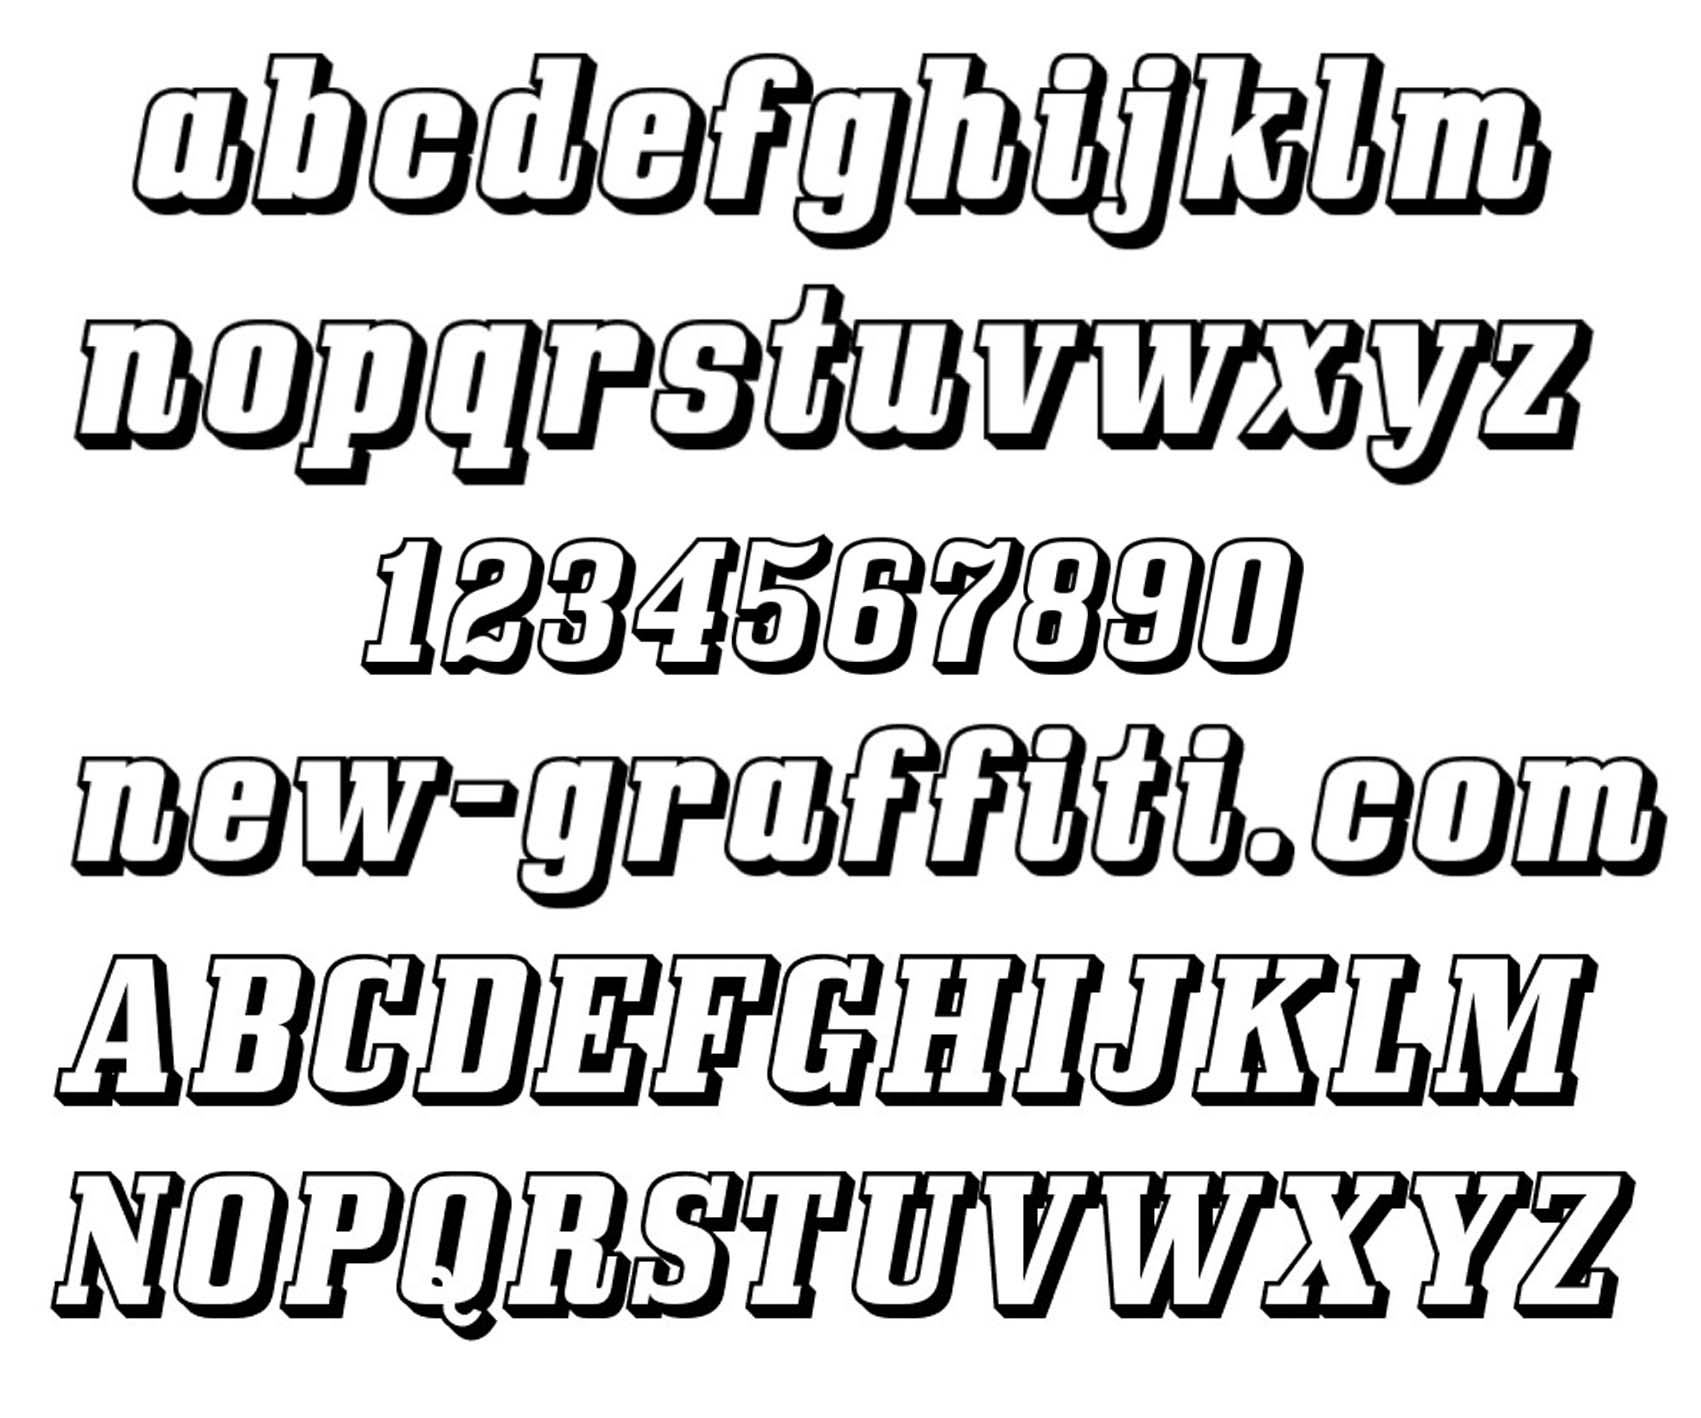 Cool Font Graffiti Alphabet Letters Lowercase